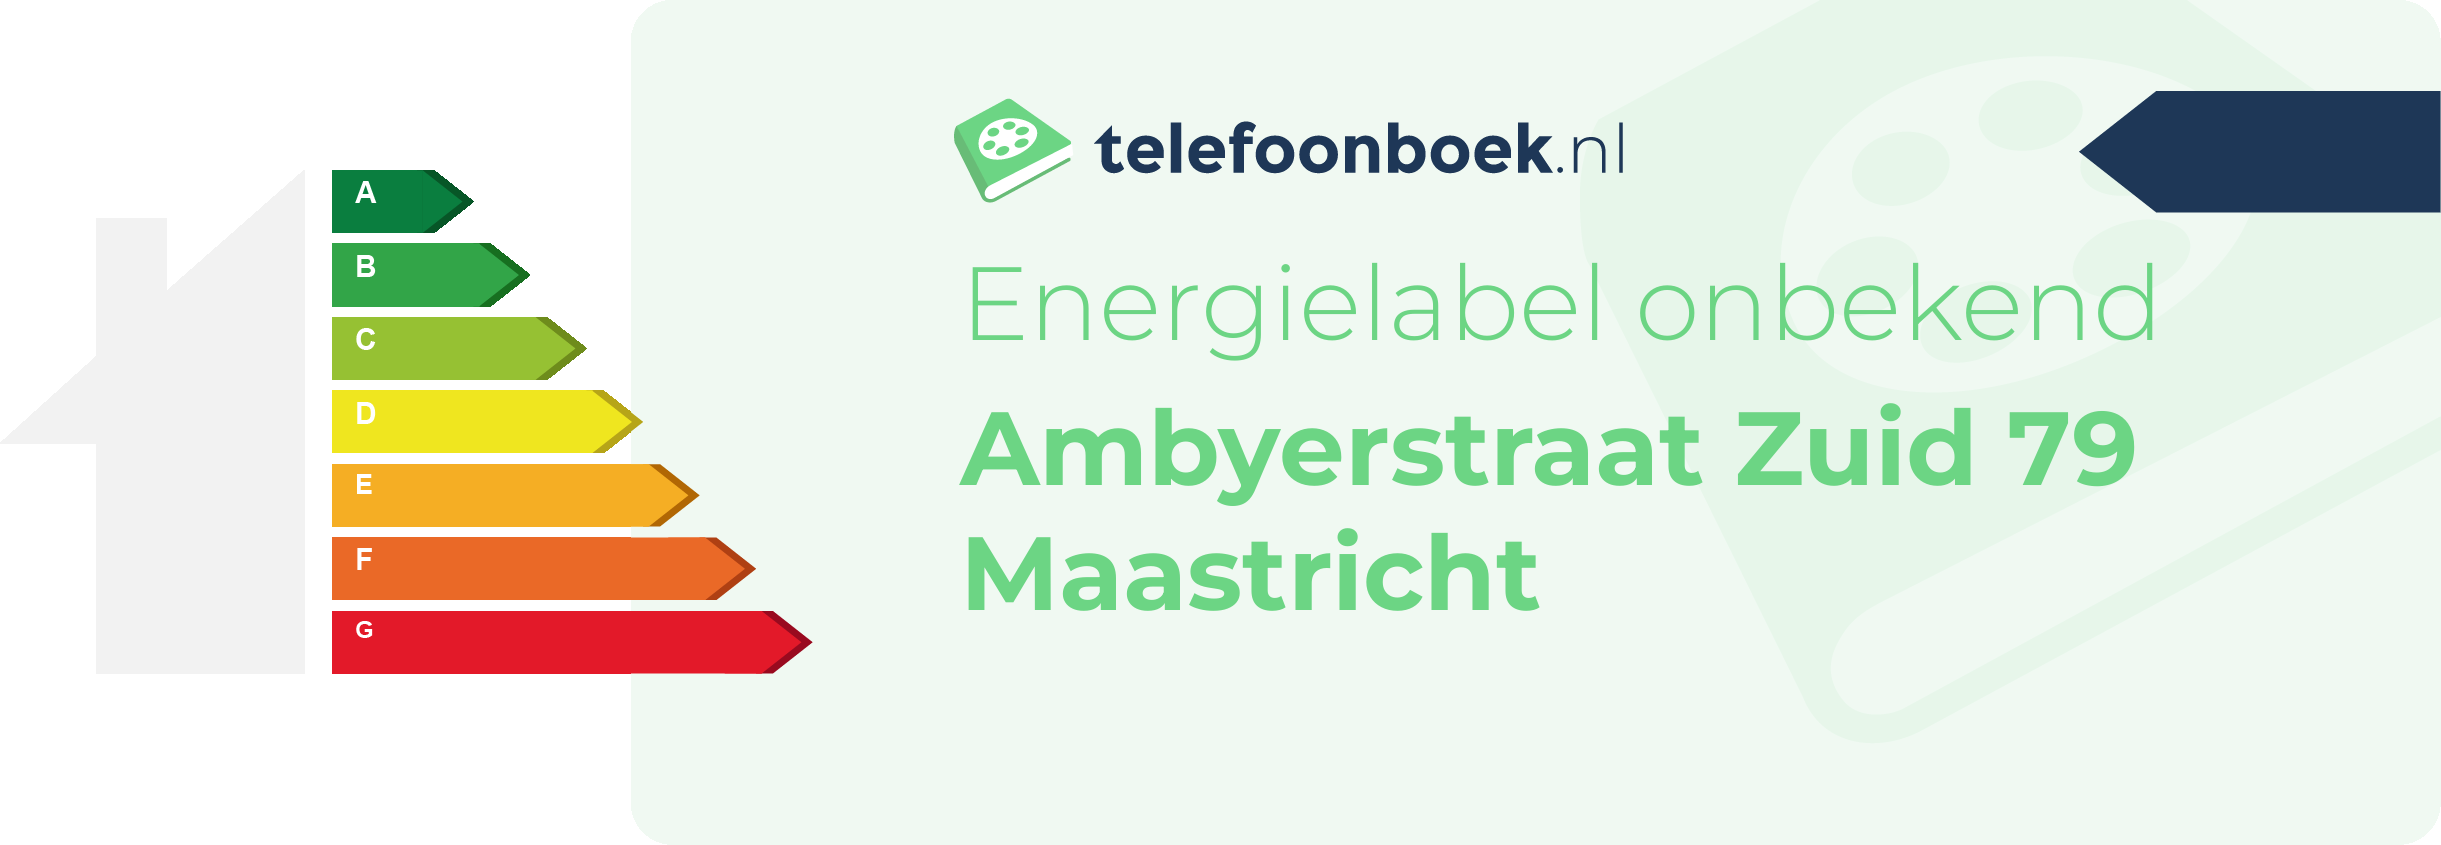 Energielabel Ambyerstraat Zuid 79 Maastricht